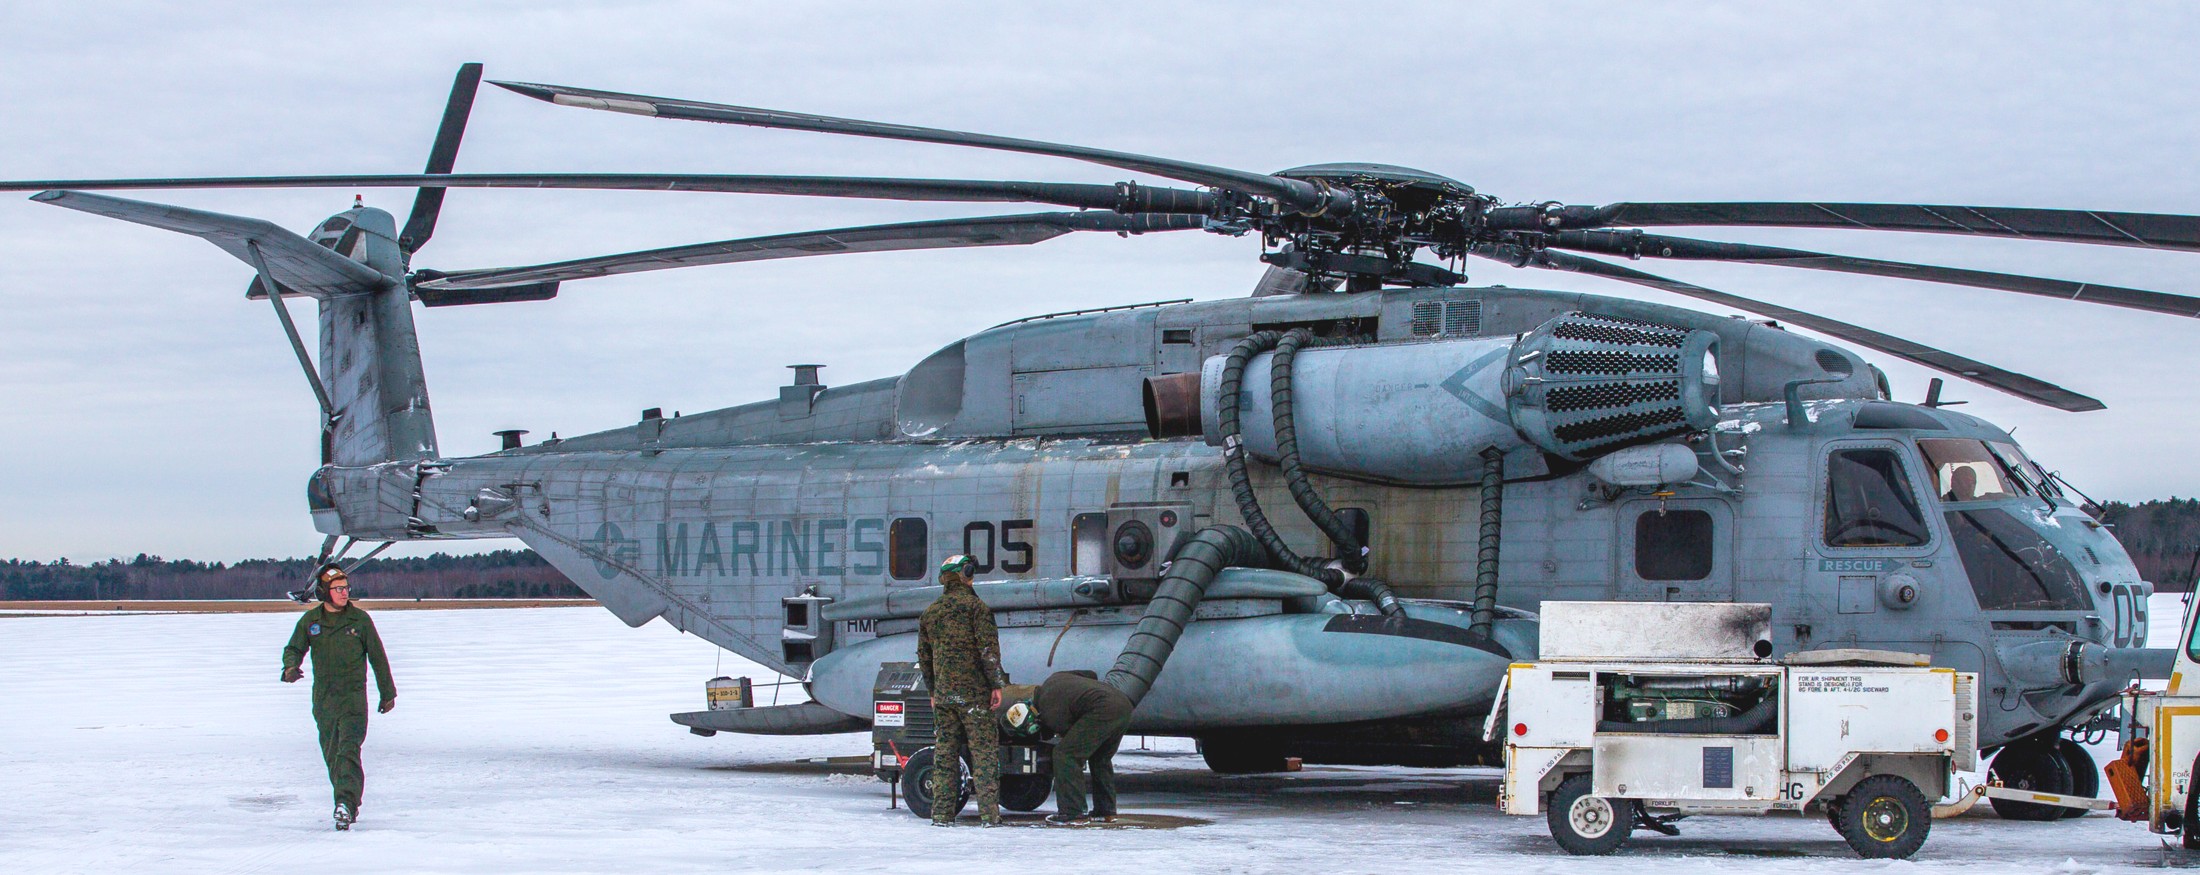 hmh-366 hammerheads ch-53e super stallion marine heavy helicopter squadron usmc 151